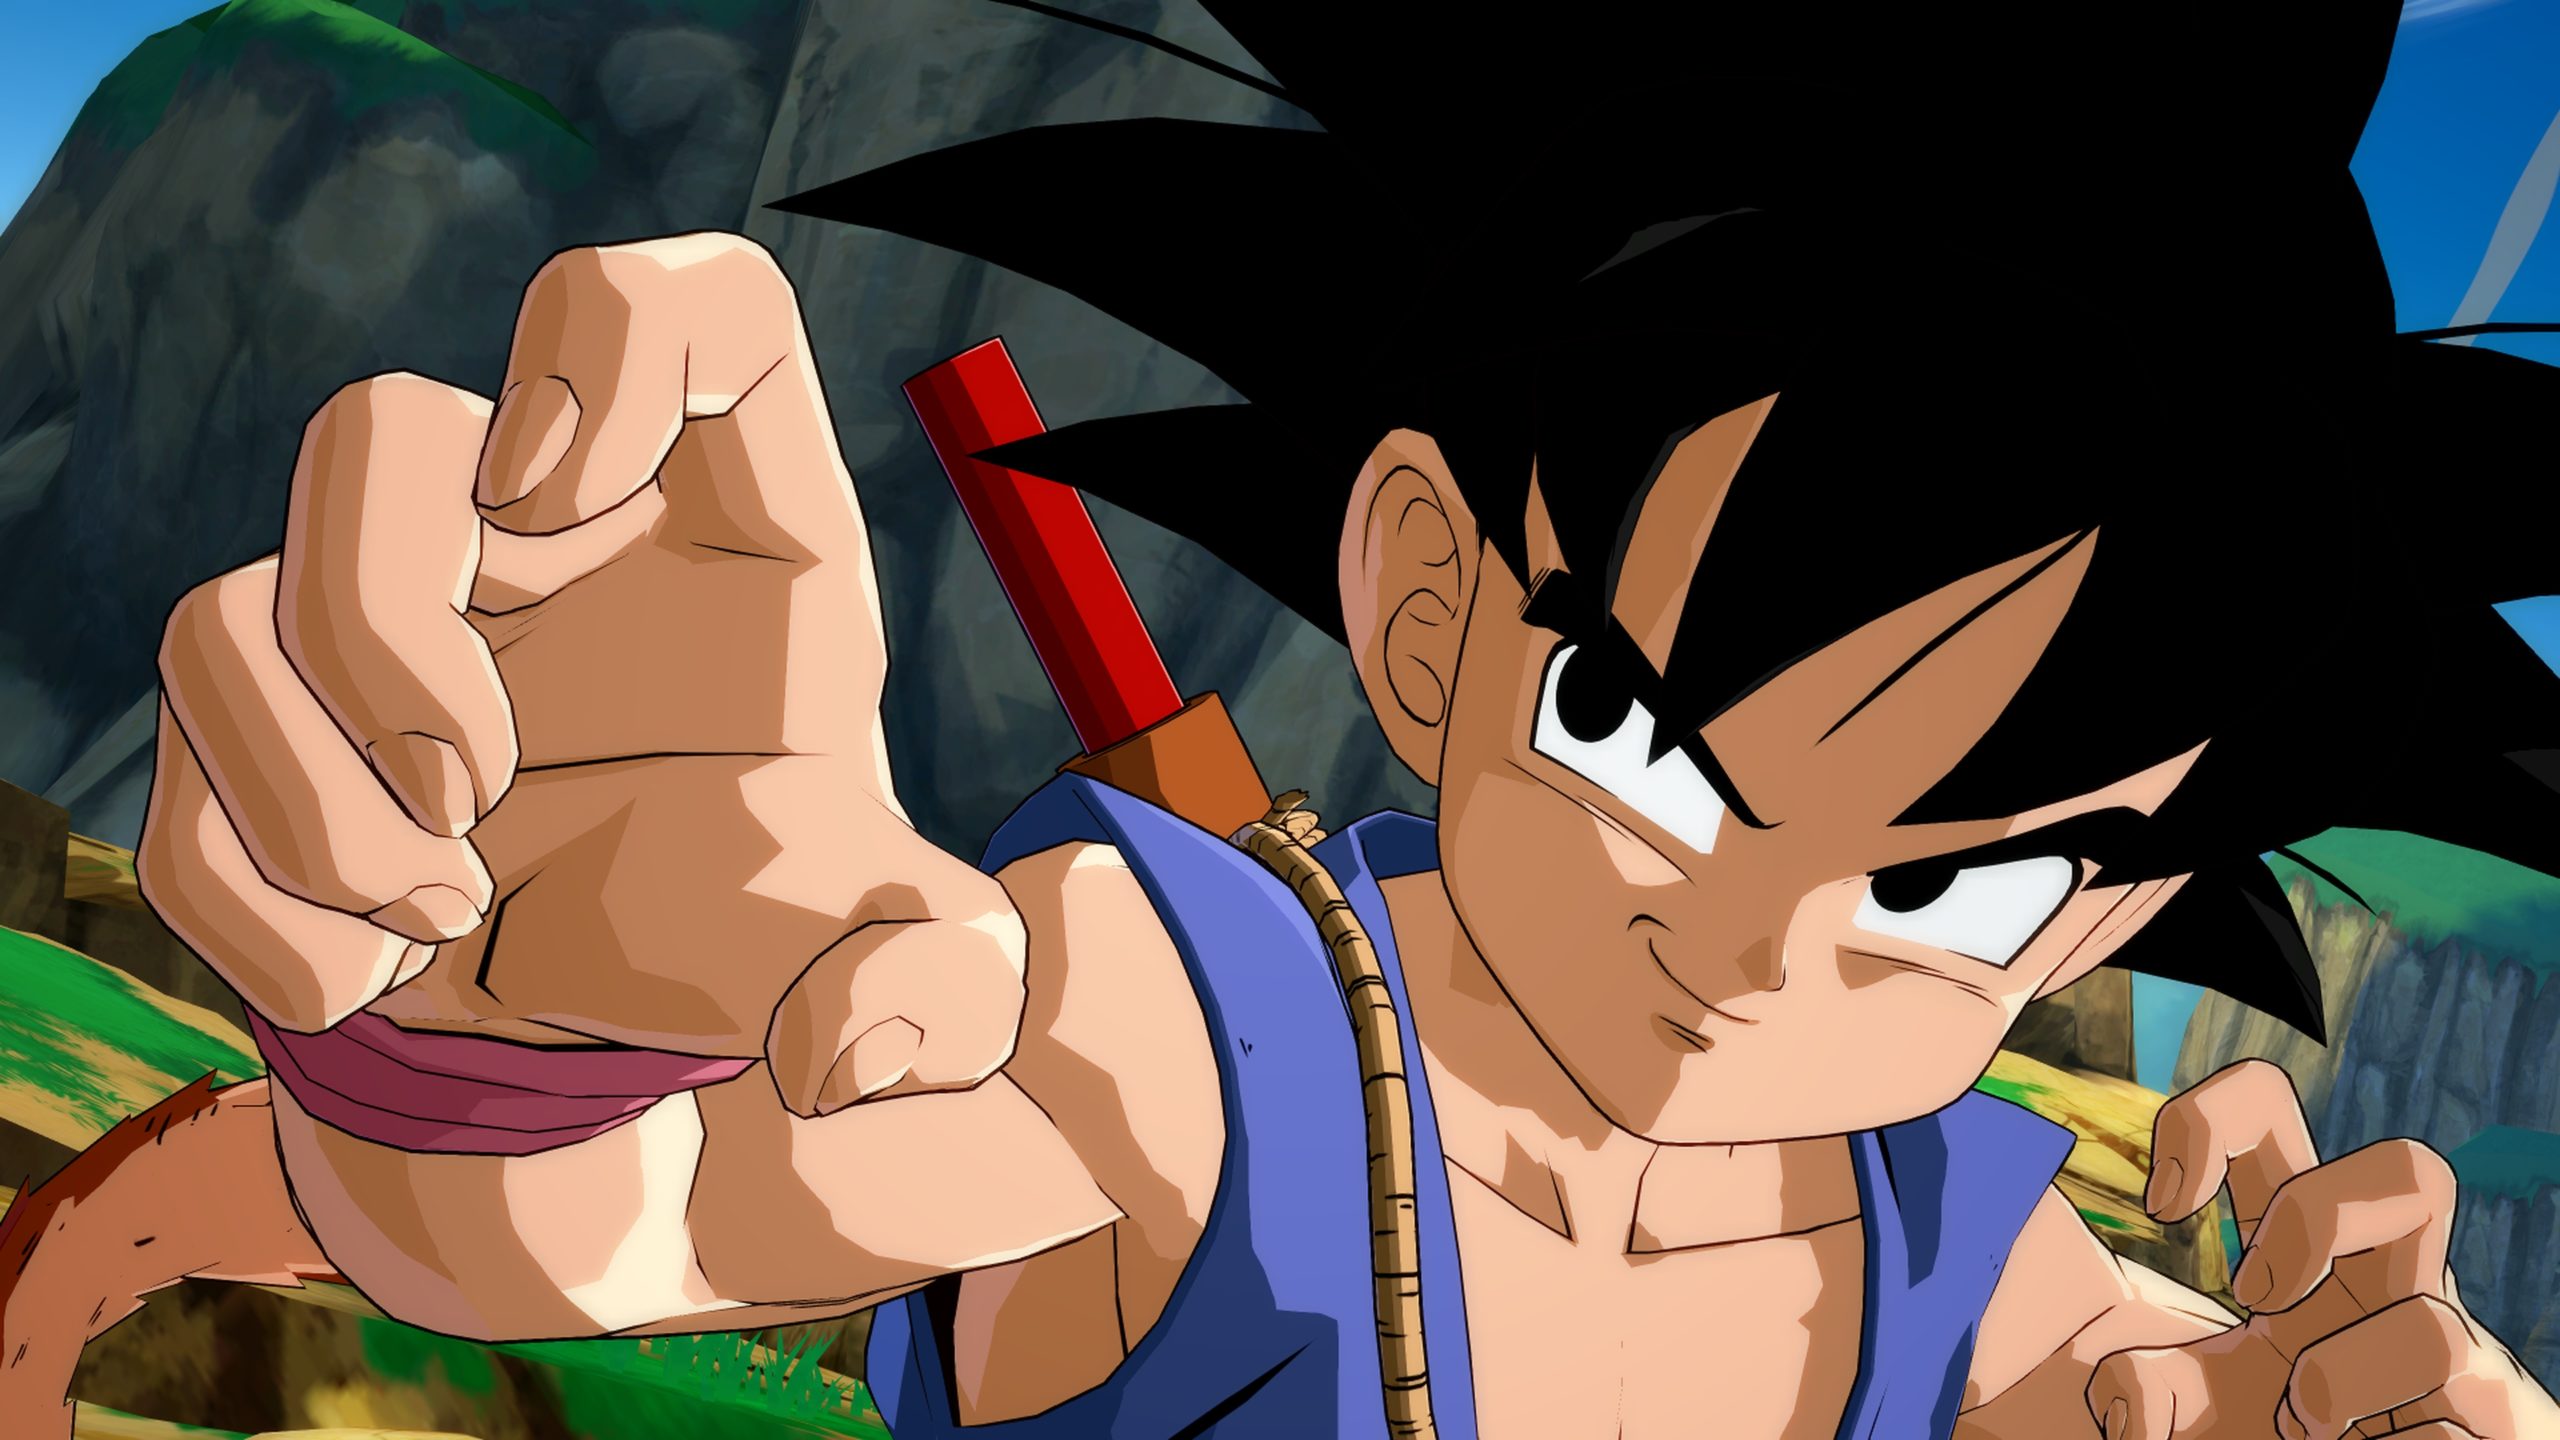 Goku GT  Fond d'ecran dessin, Fond d'écran japon, Dessin facile